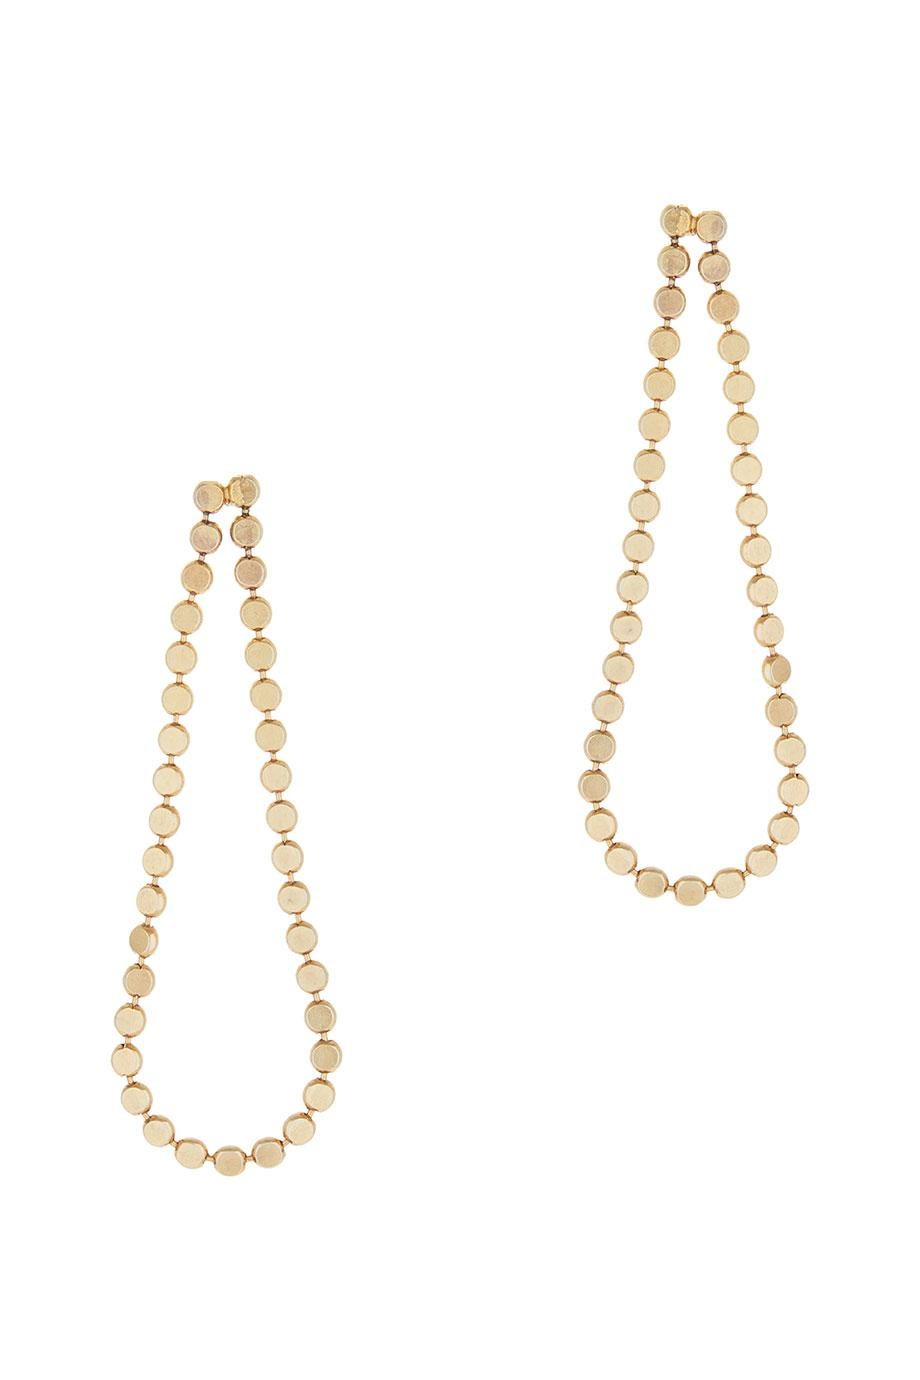 Women's  Earrings Chains Drops Round Motif Chain 18K Gold-Plated Silver Greek Earrings For Sale